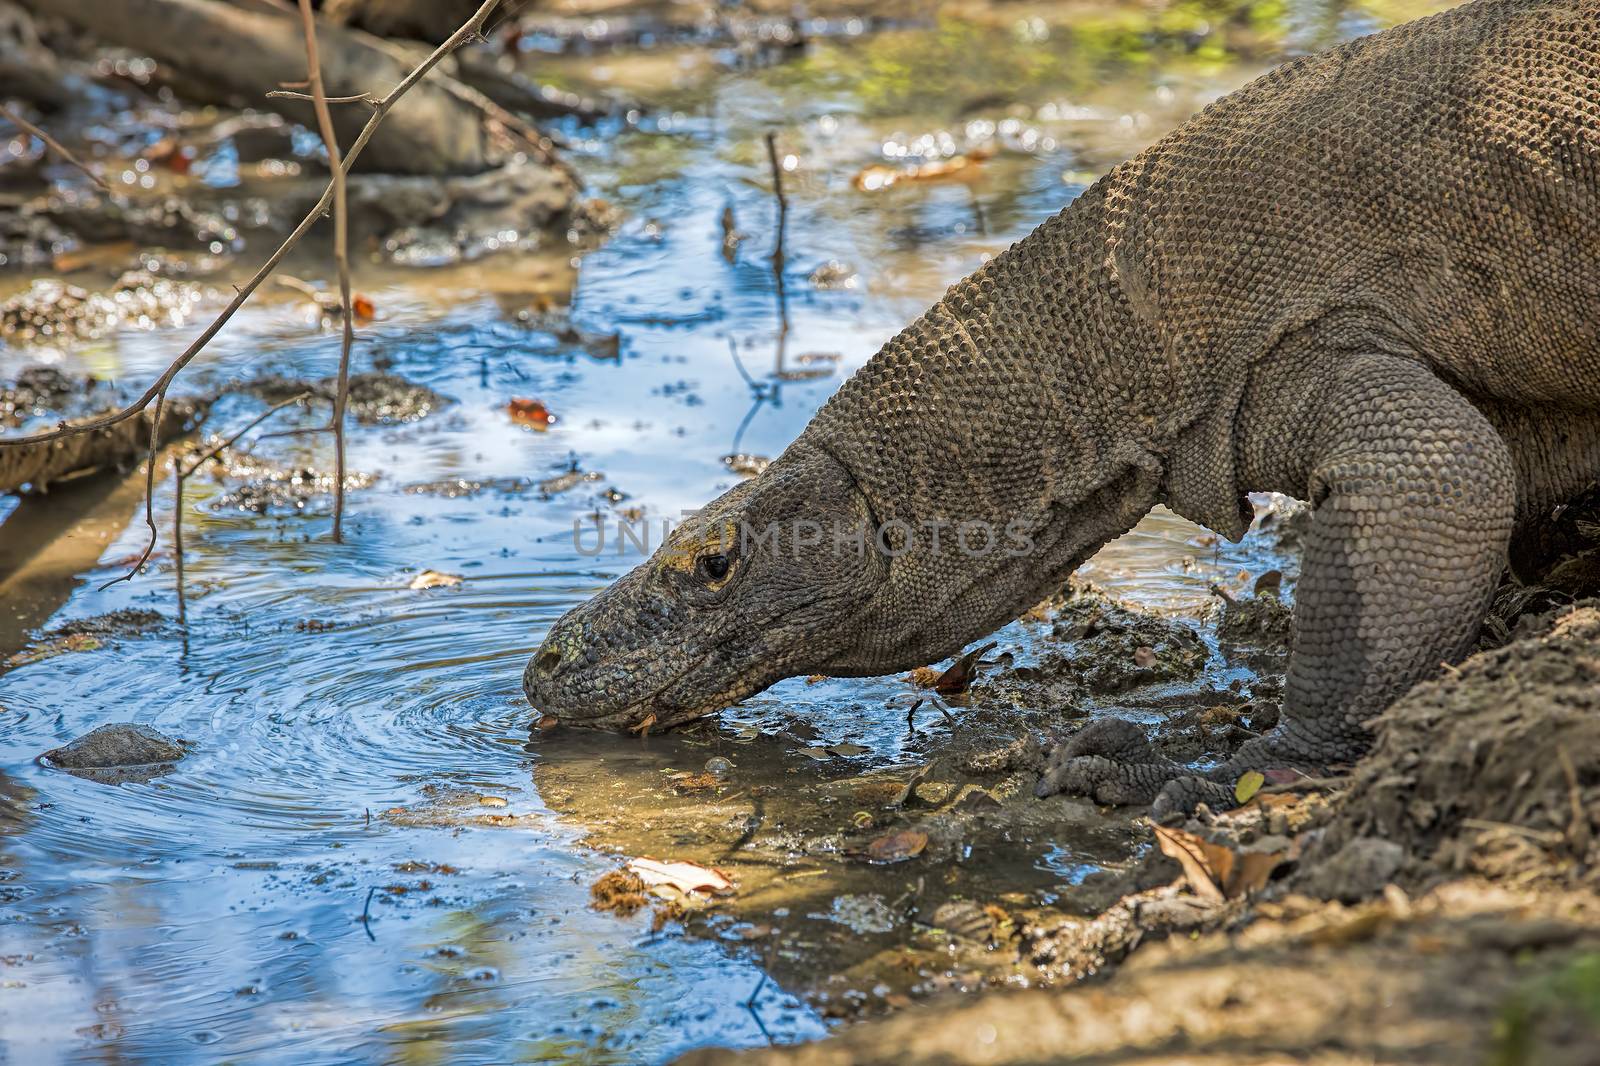 Komodo Dragon drinking water in the wild on Komodo Island